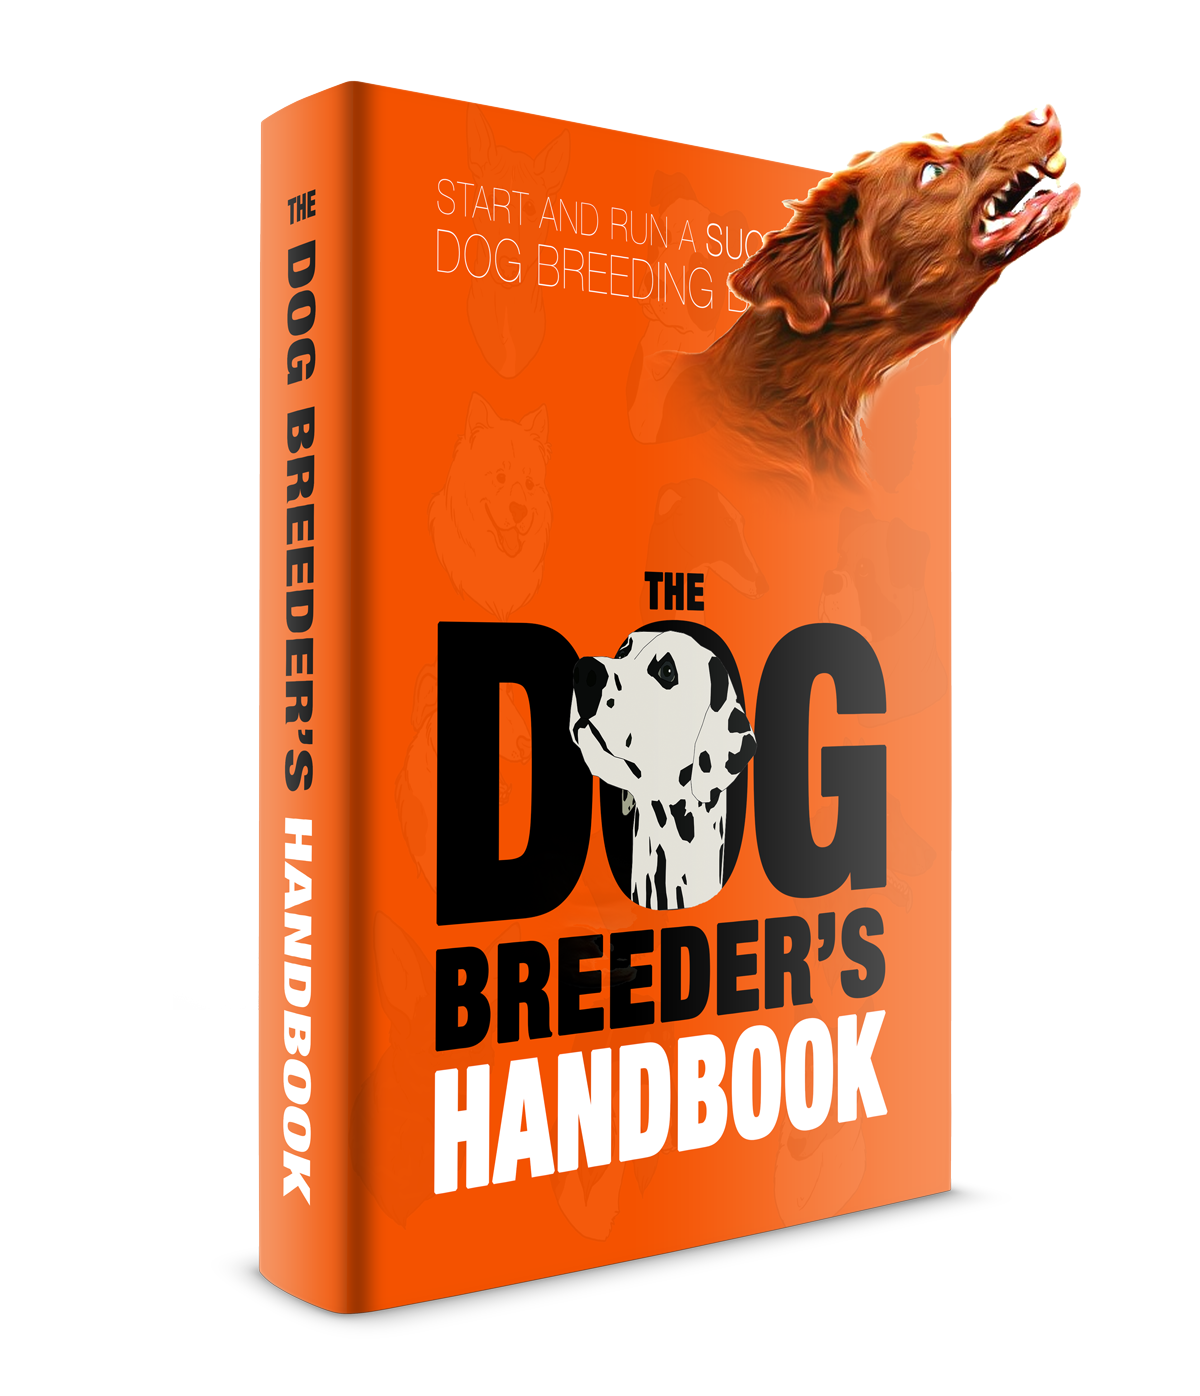 Buy Your Copy of The Dog Breeder's Handbook Now!